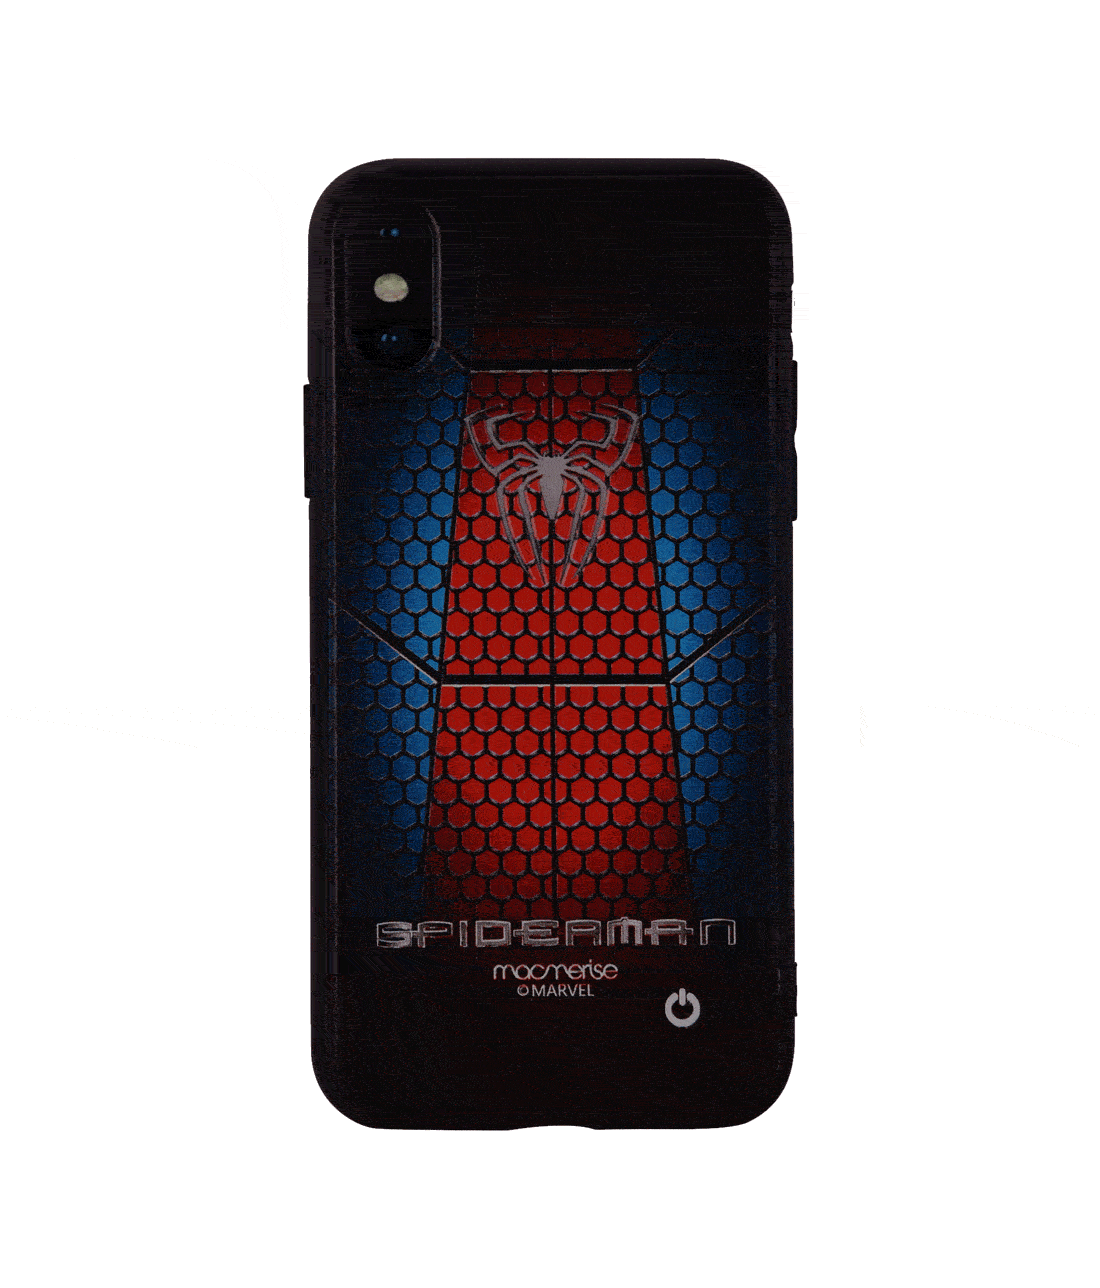 Spider Web Suit - Lumous LED Phone Case for iPhone X